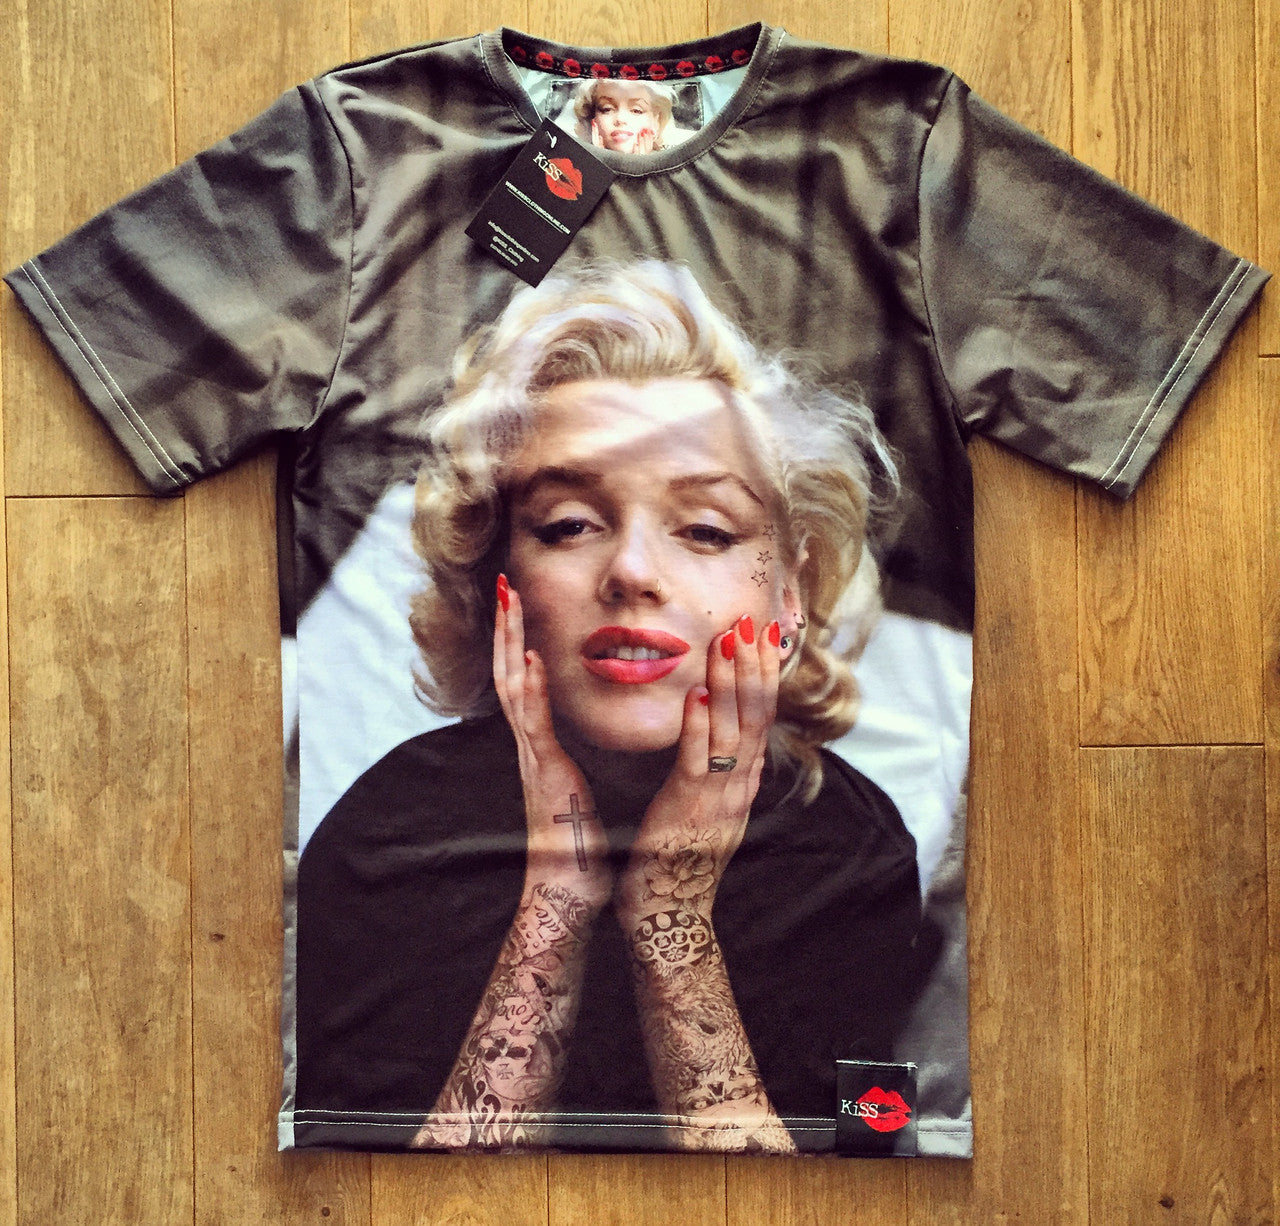 Marilyn Monroe Tattooed KiSS Cut & Sew T-Shirt - Inked Sleeve design - Art, Unique Artwork - Tattooist Artist - Present Gift